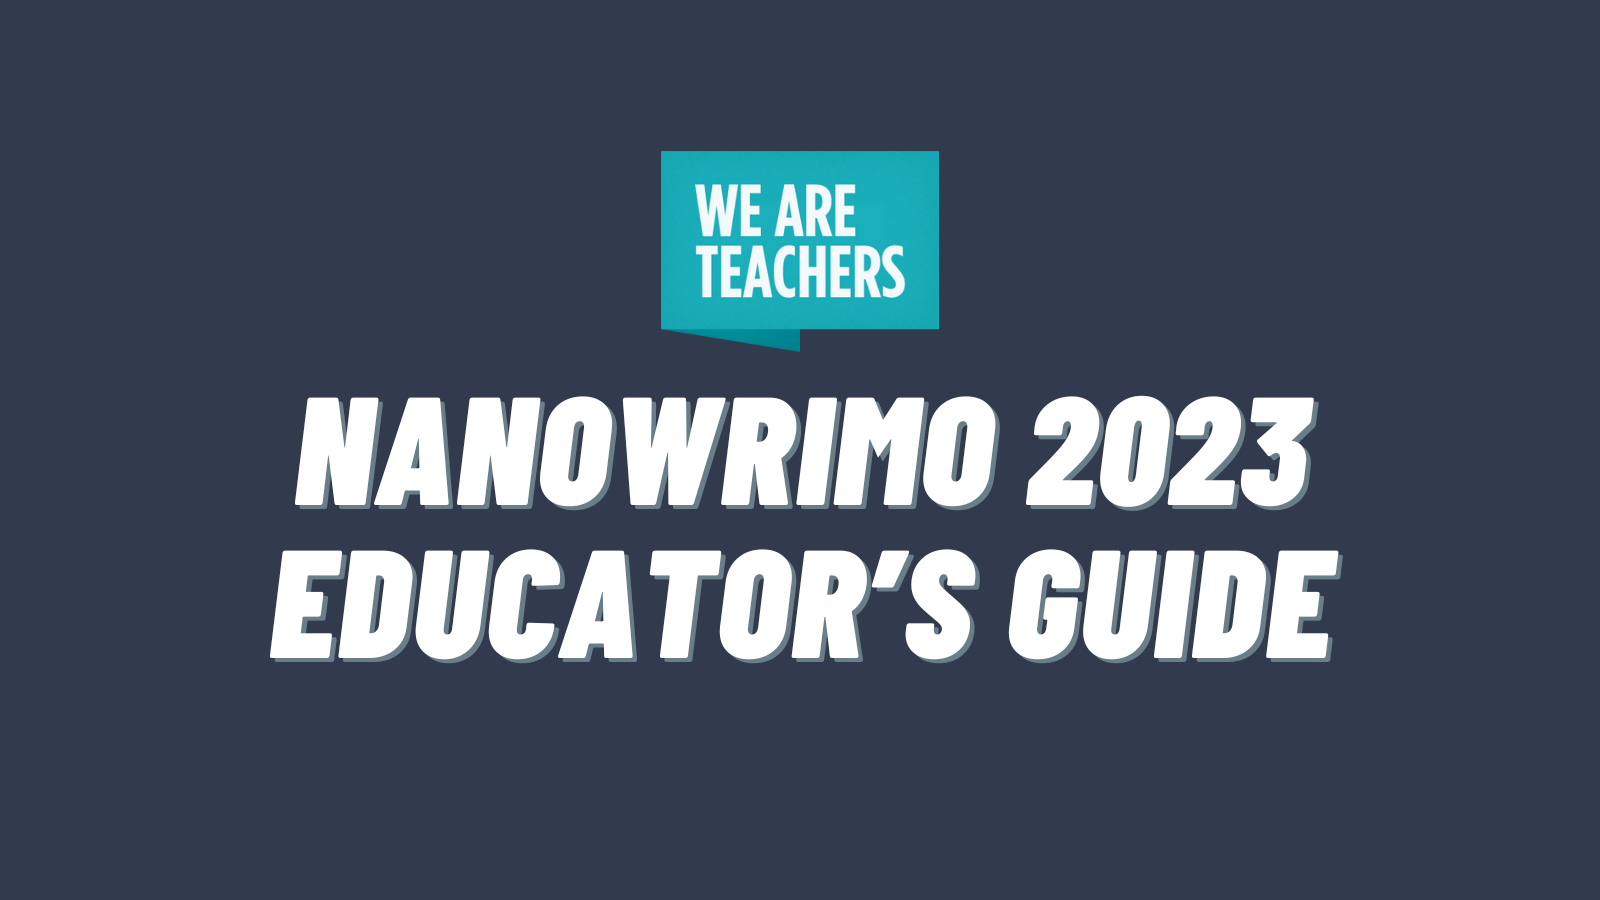 We Are Teachers NaNoWriMo 2023 Educator's Guide